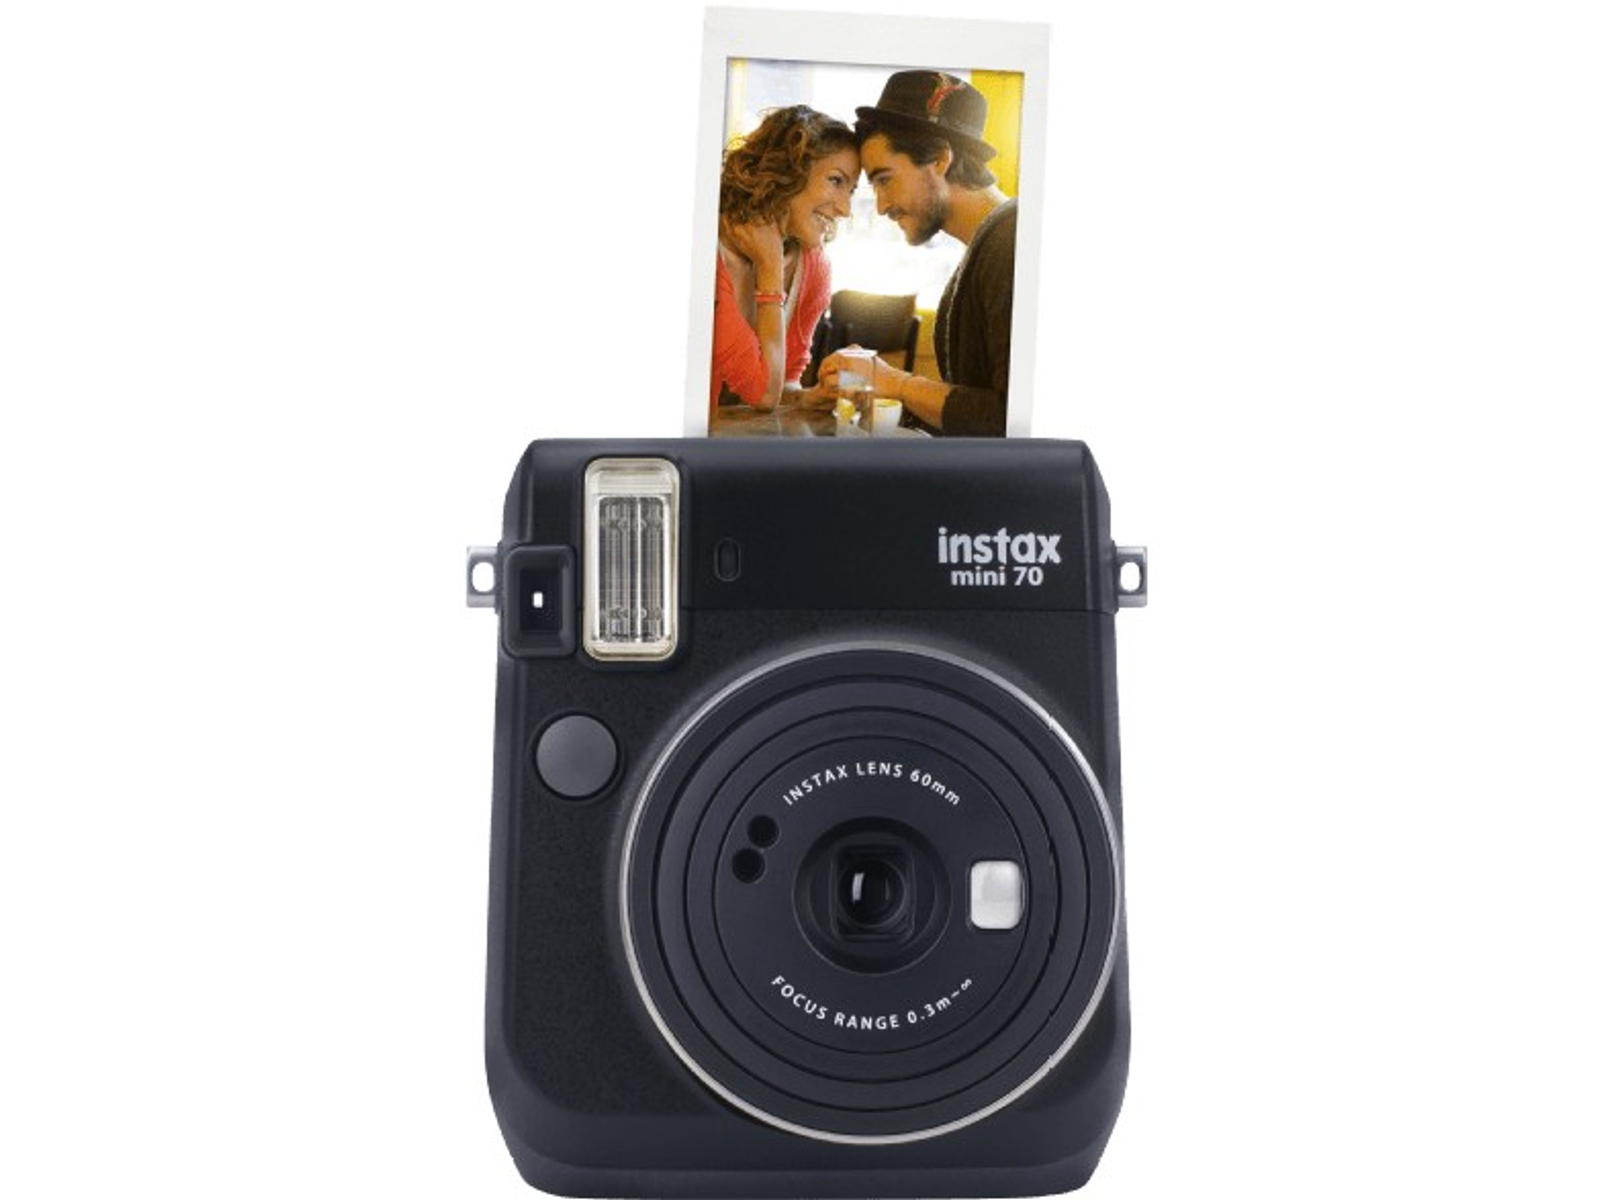 Fujifilm Instax Mini 70 62 46mm negro iso 800 0.37x 60 112.7 flash tamaño bk espejo frontal modo selfie camara instantanea 16513877 12 1400 2 cr2dl 62x46mm 16513877fujifilm